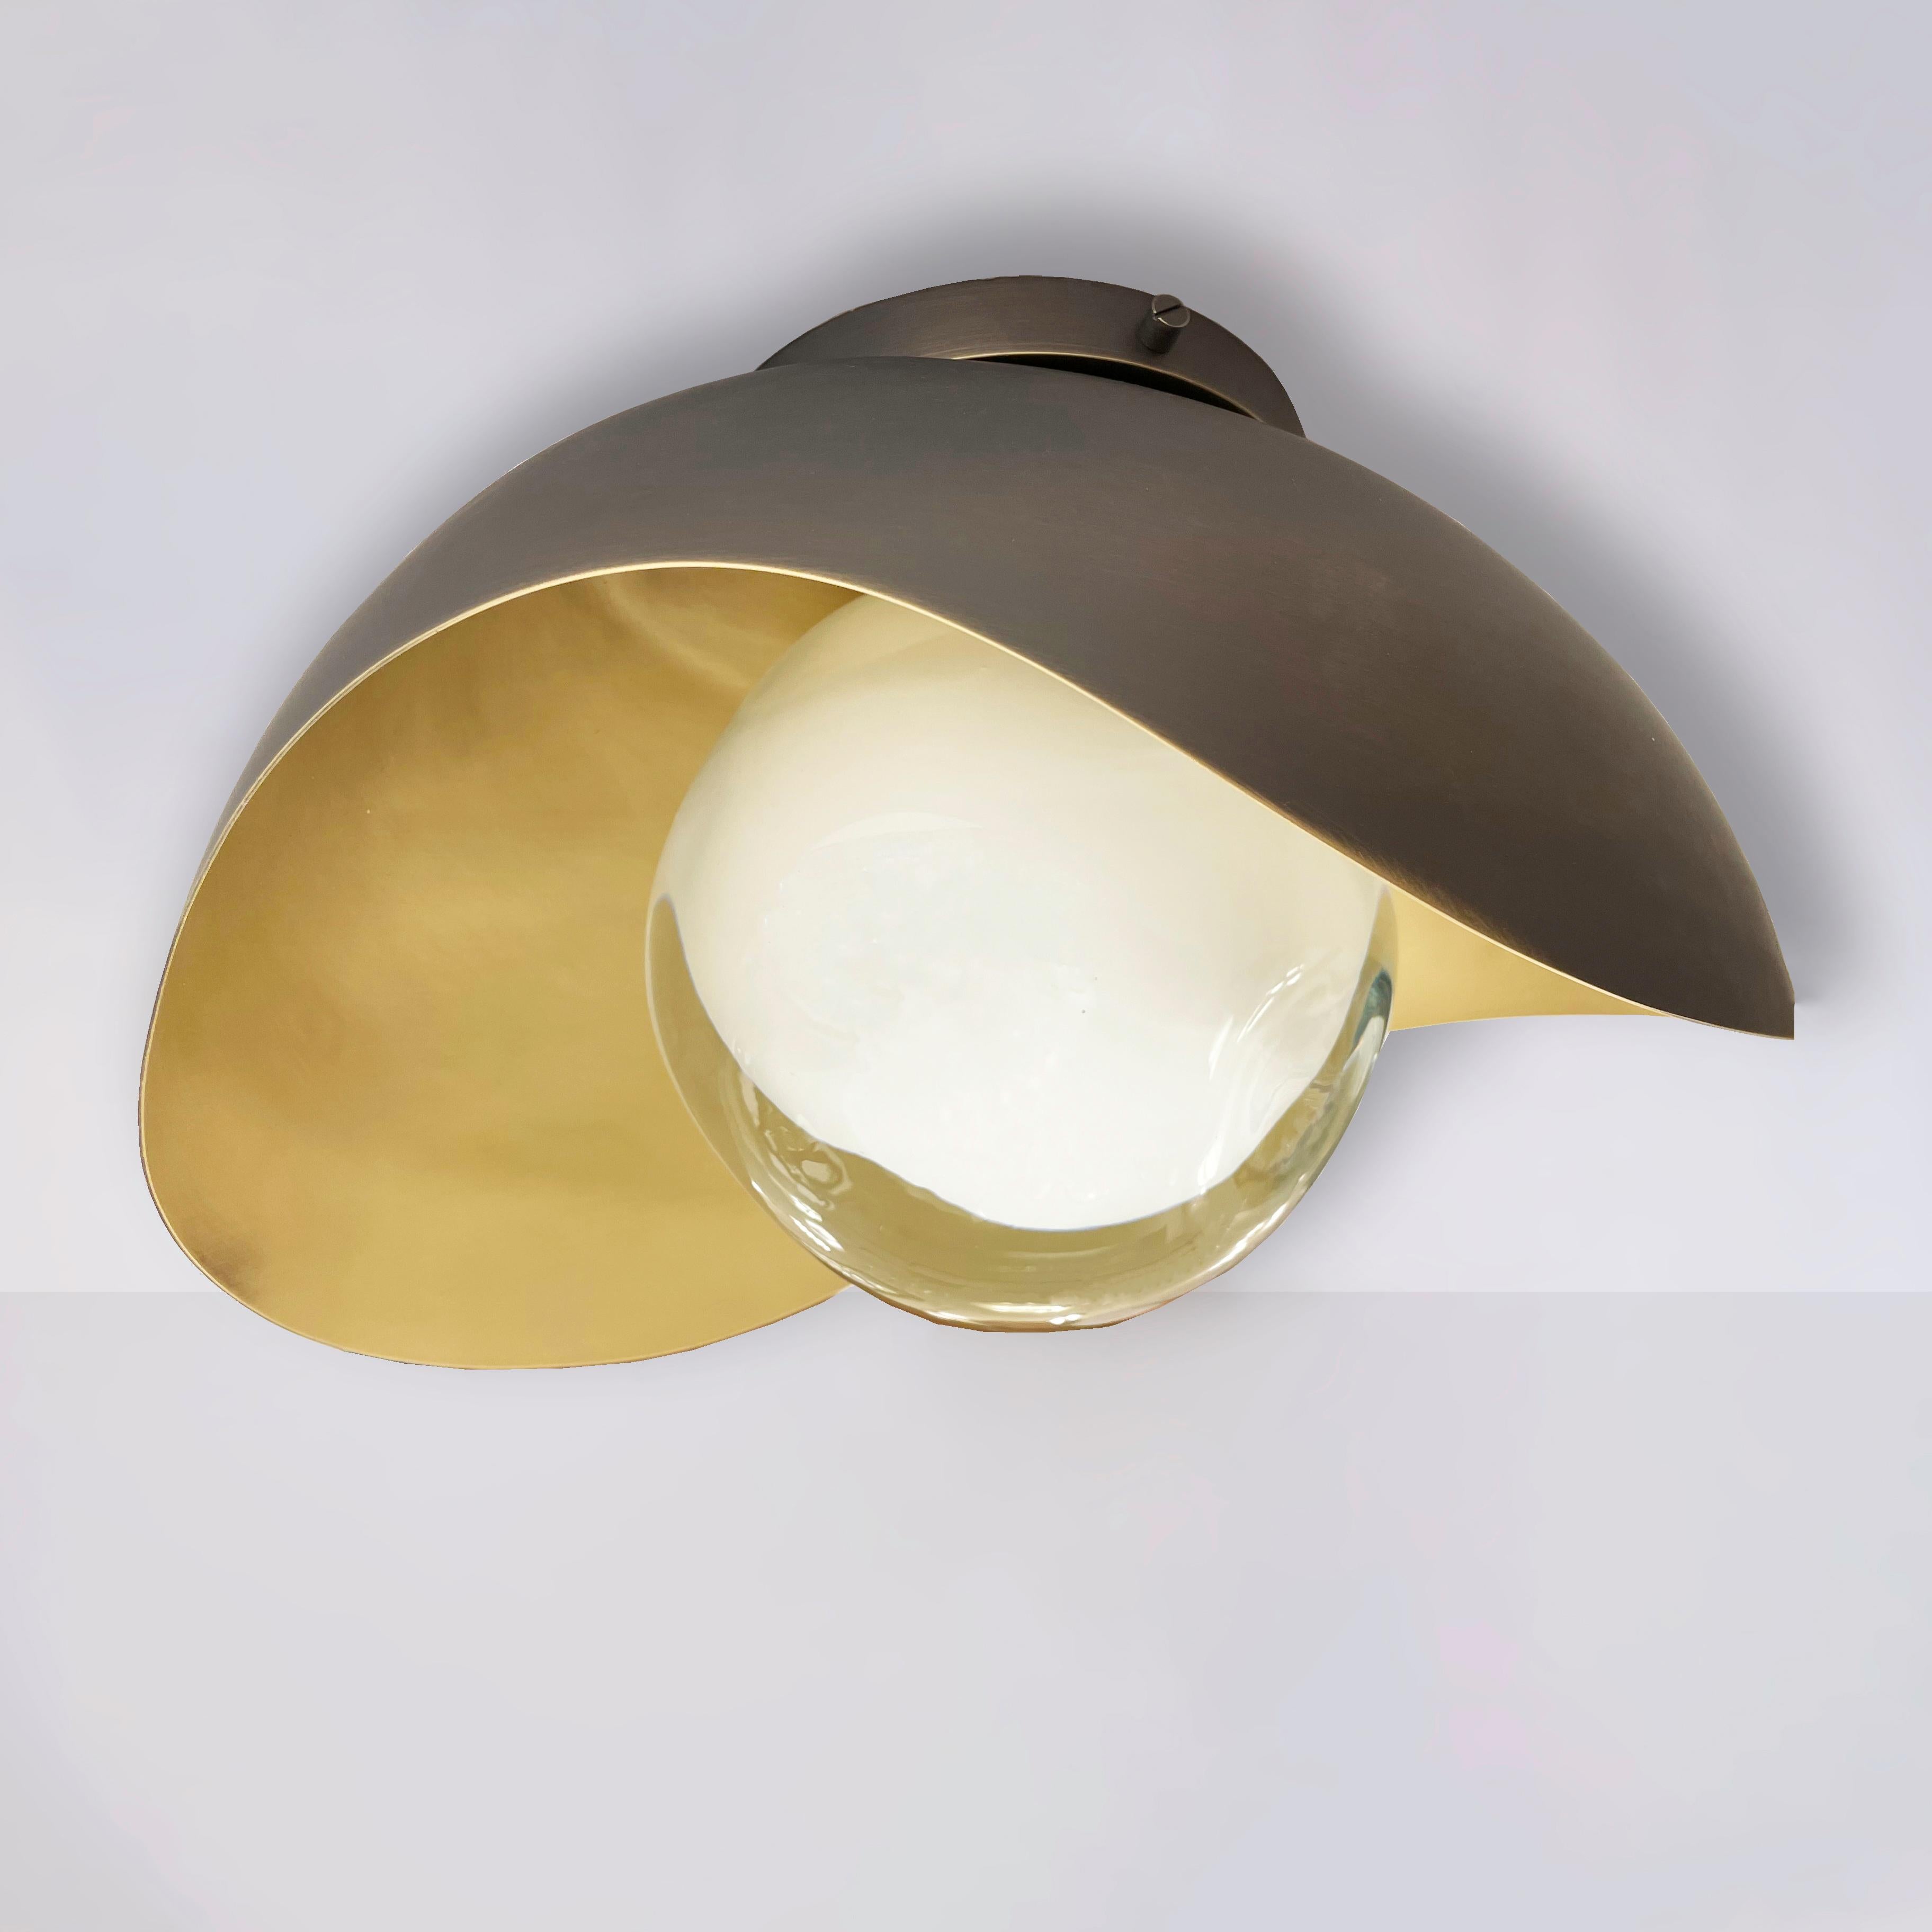 Perla Flushmount Ceiling Light by Gaspare Asaro-Brass Finish For Sale 7